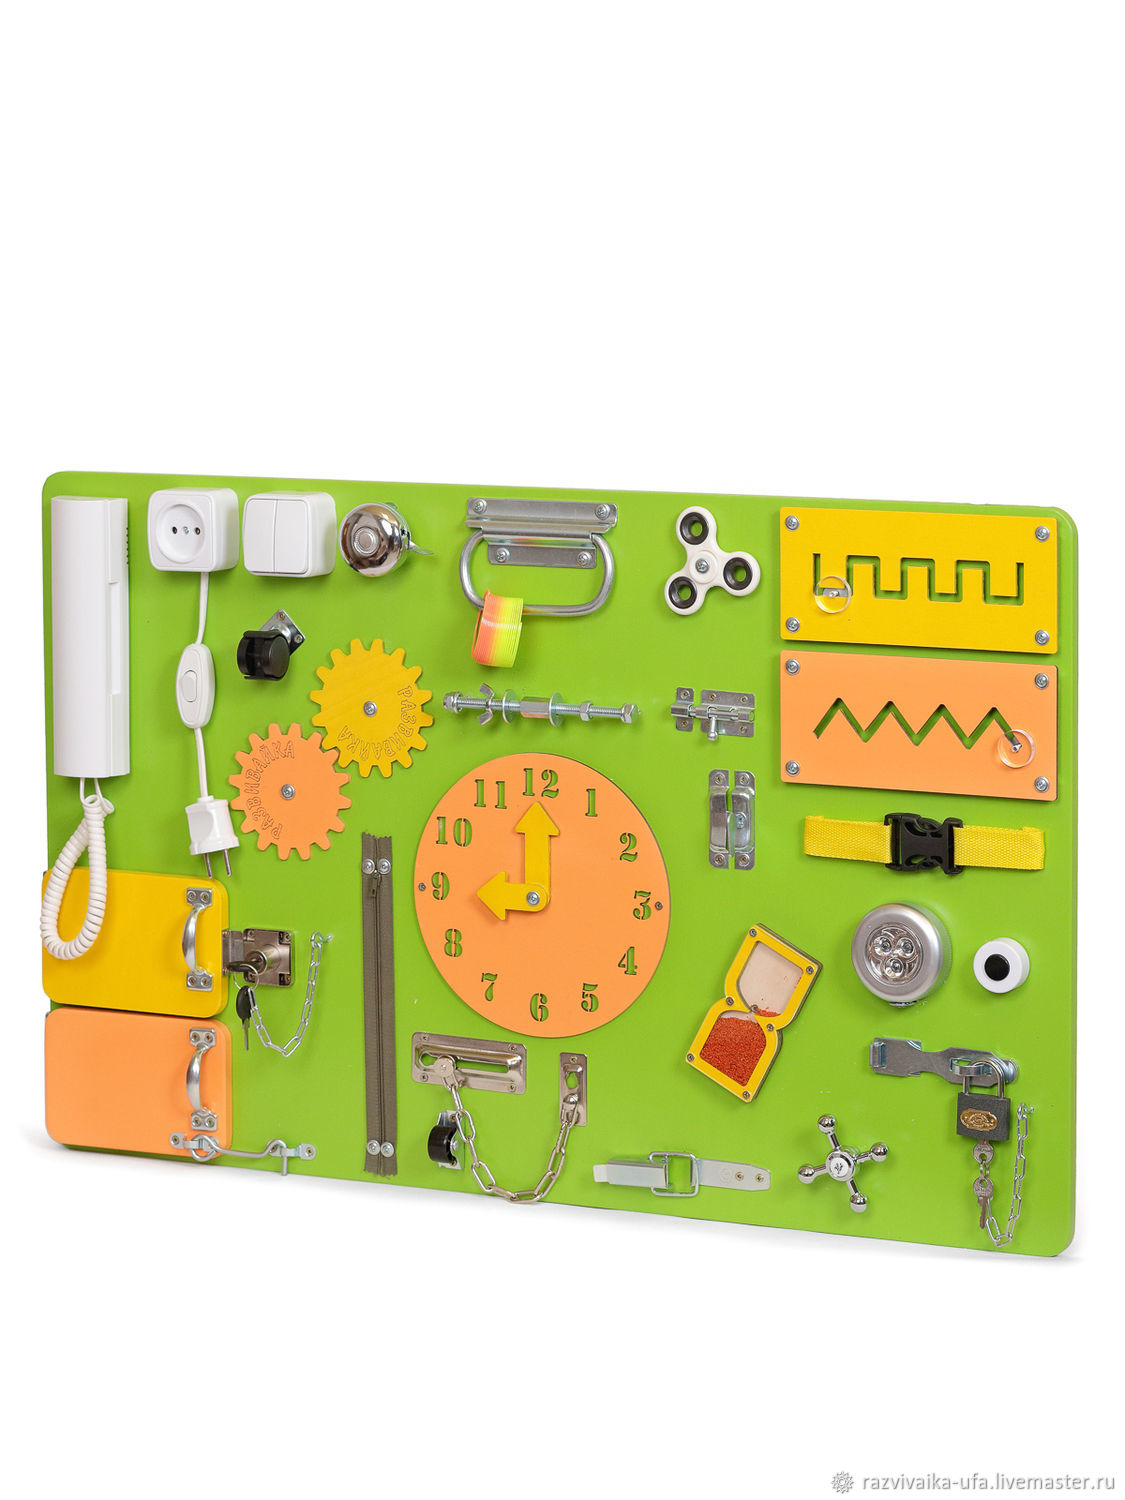 Copy of the product Bizibord Maxi 50*80 cm, light green, Busyboards, Ufa,  Фото №1